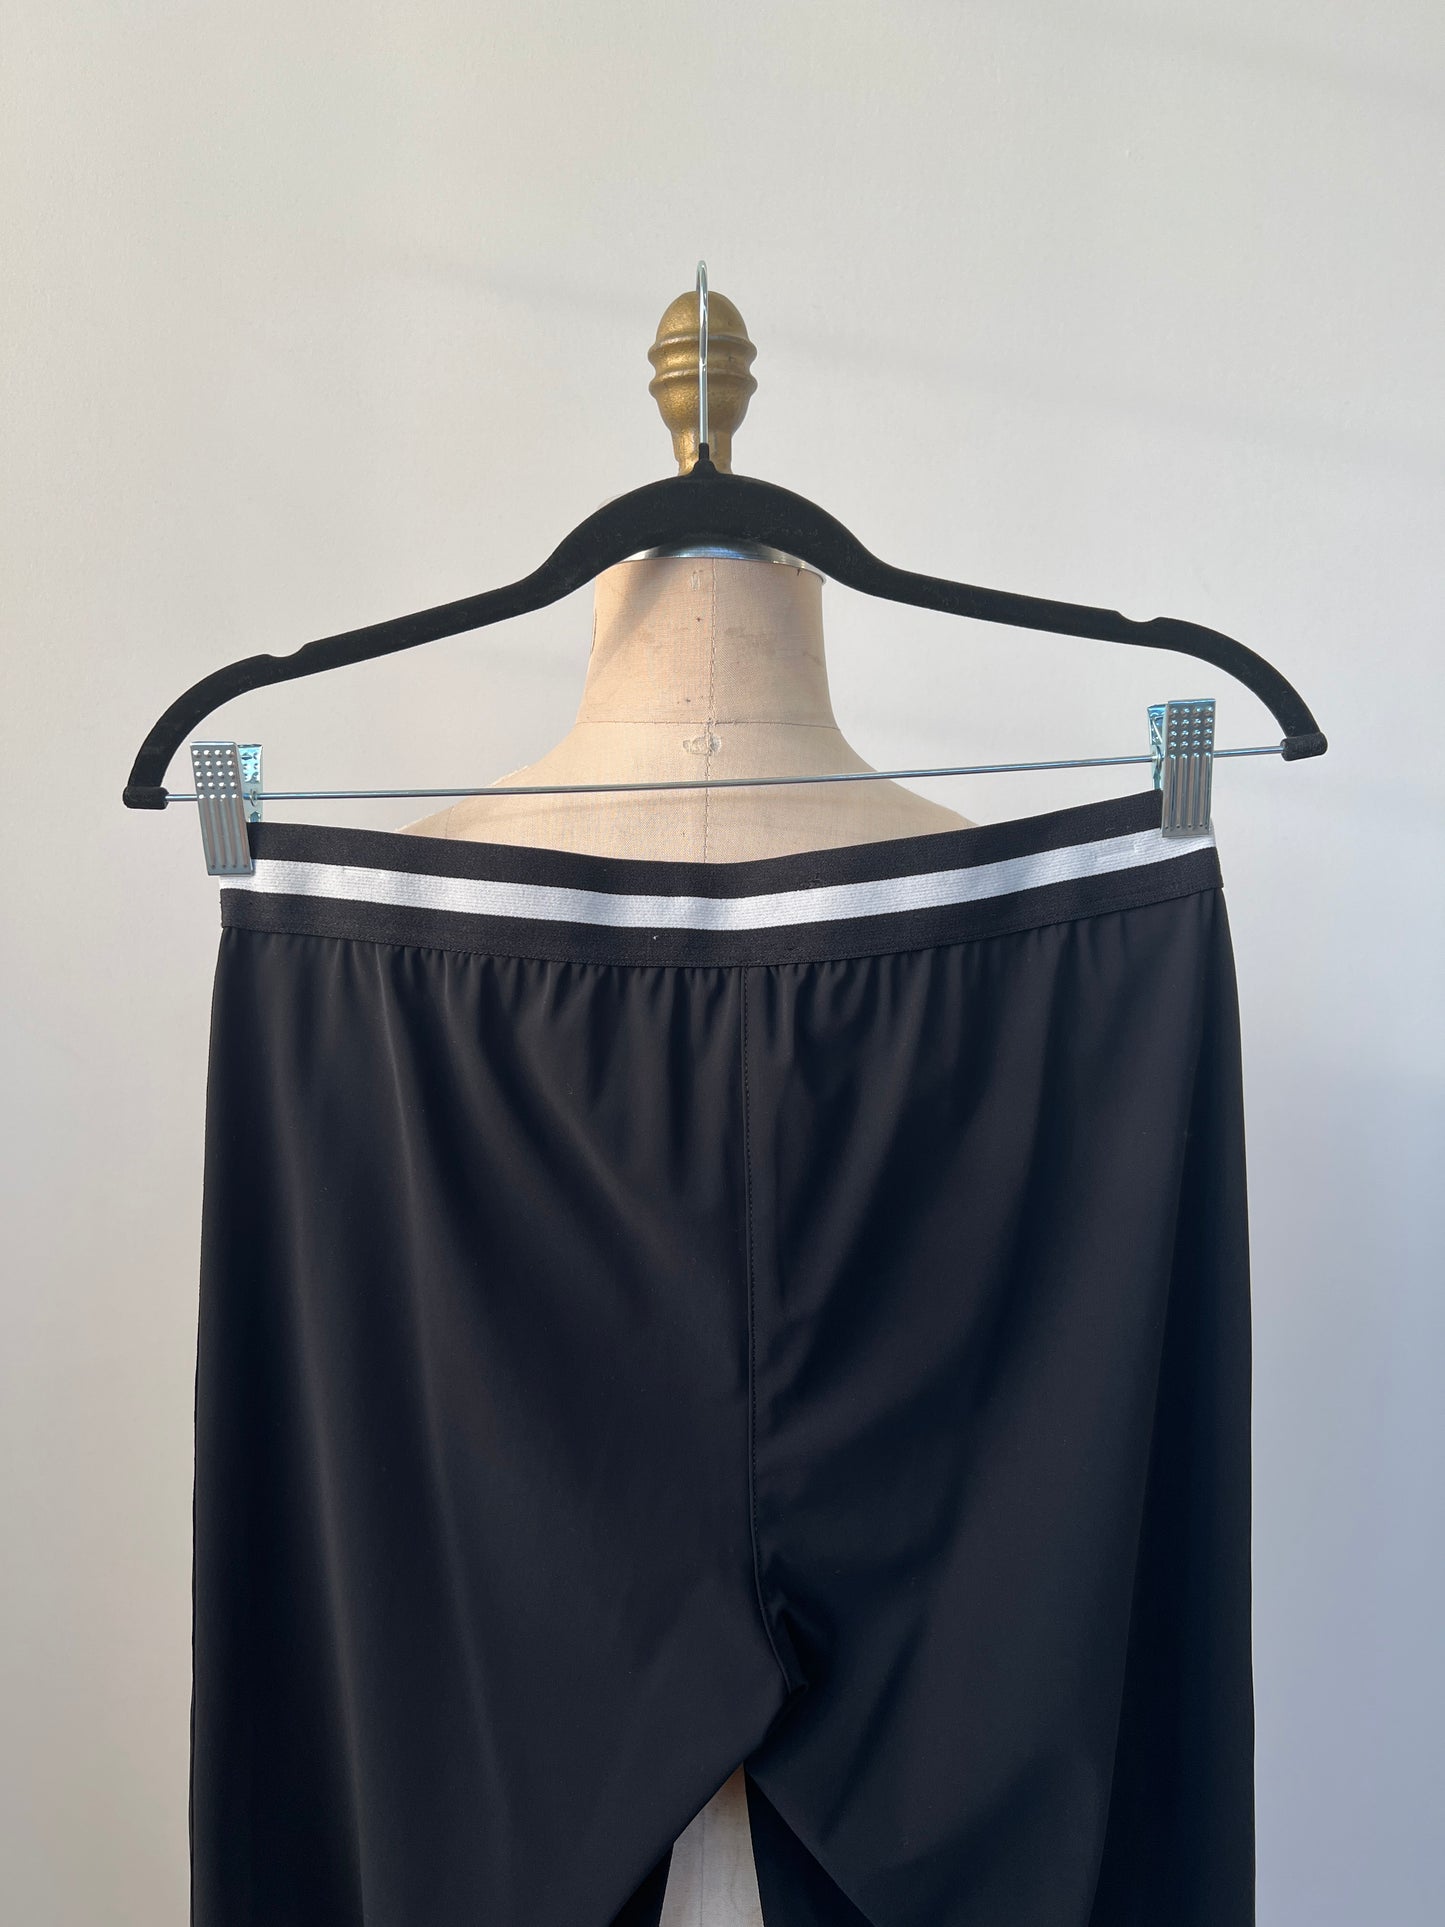 Pantalon legging en microfibre noire (10)